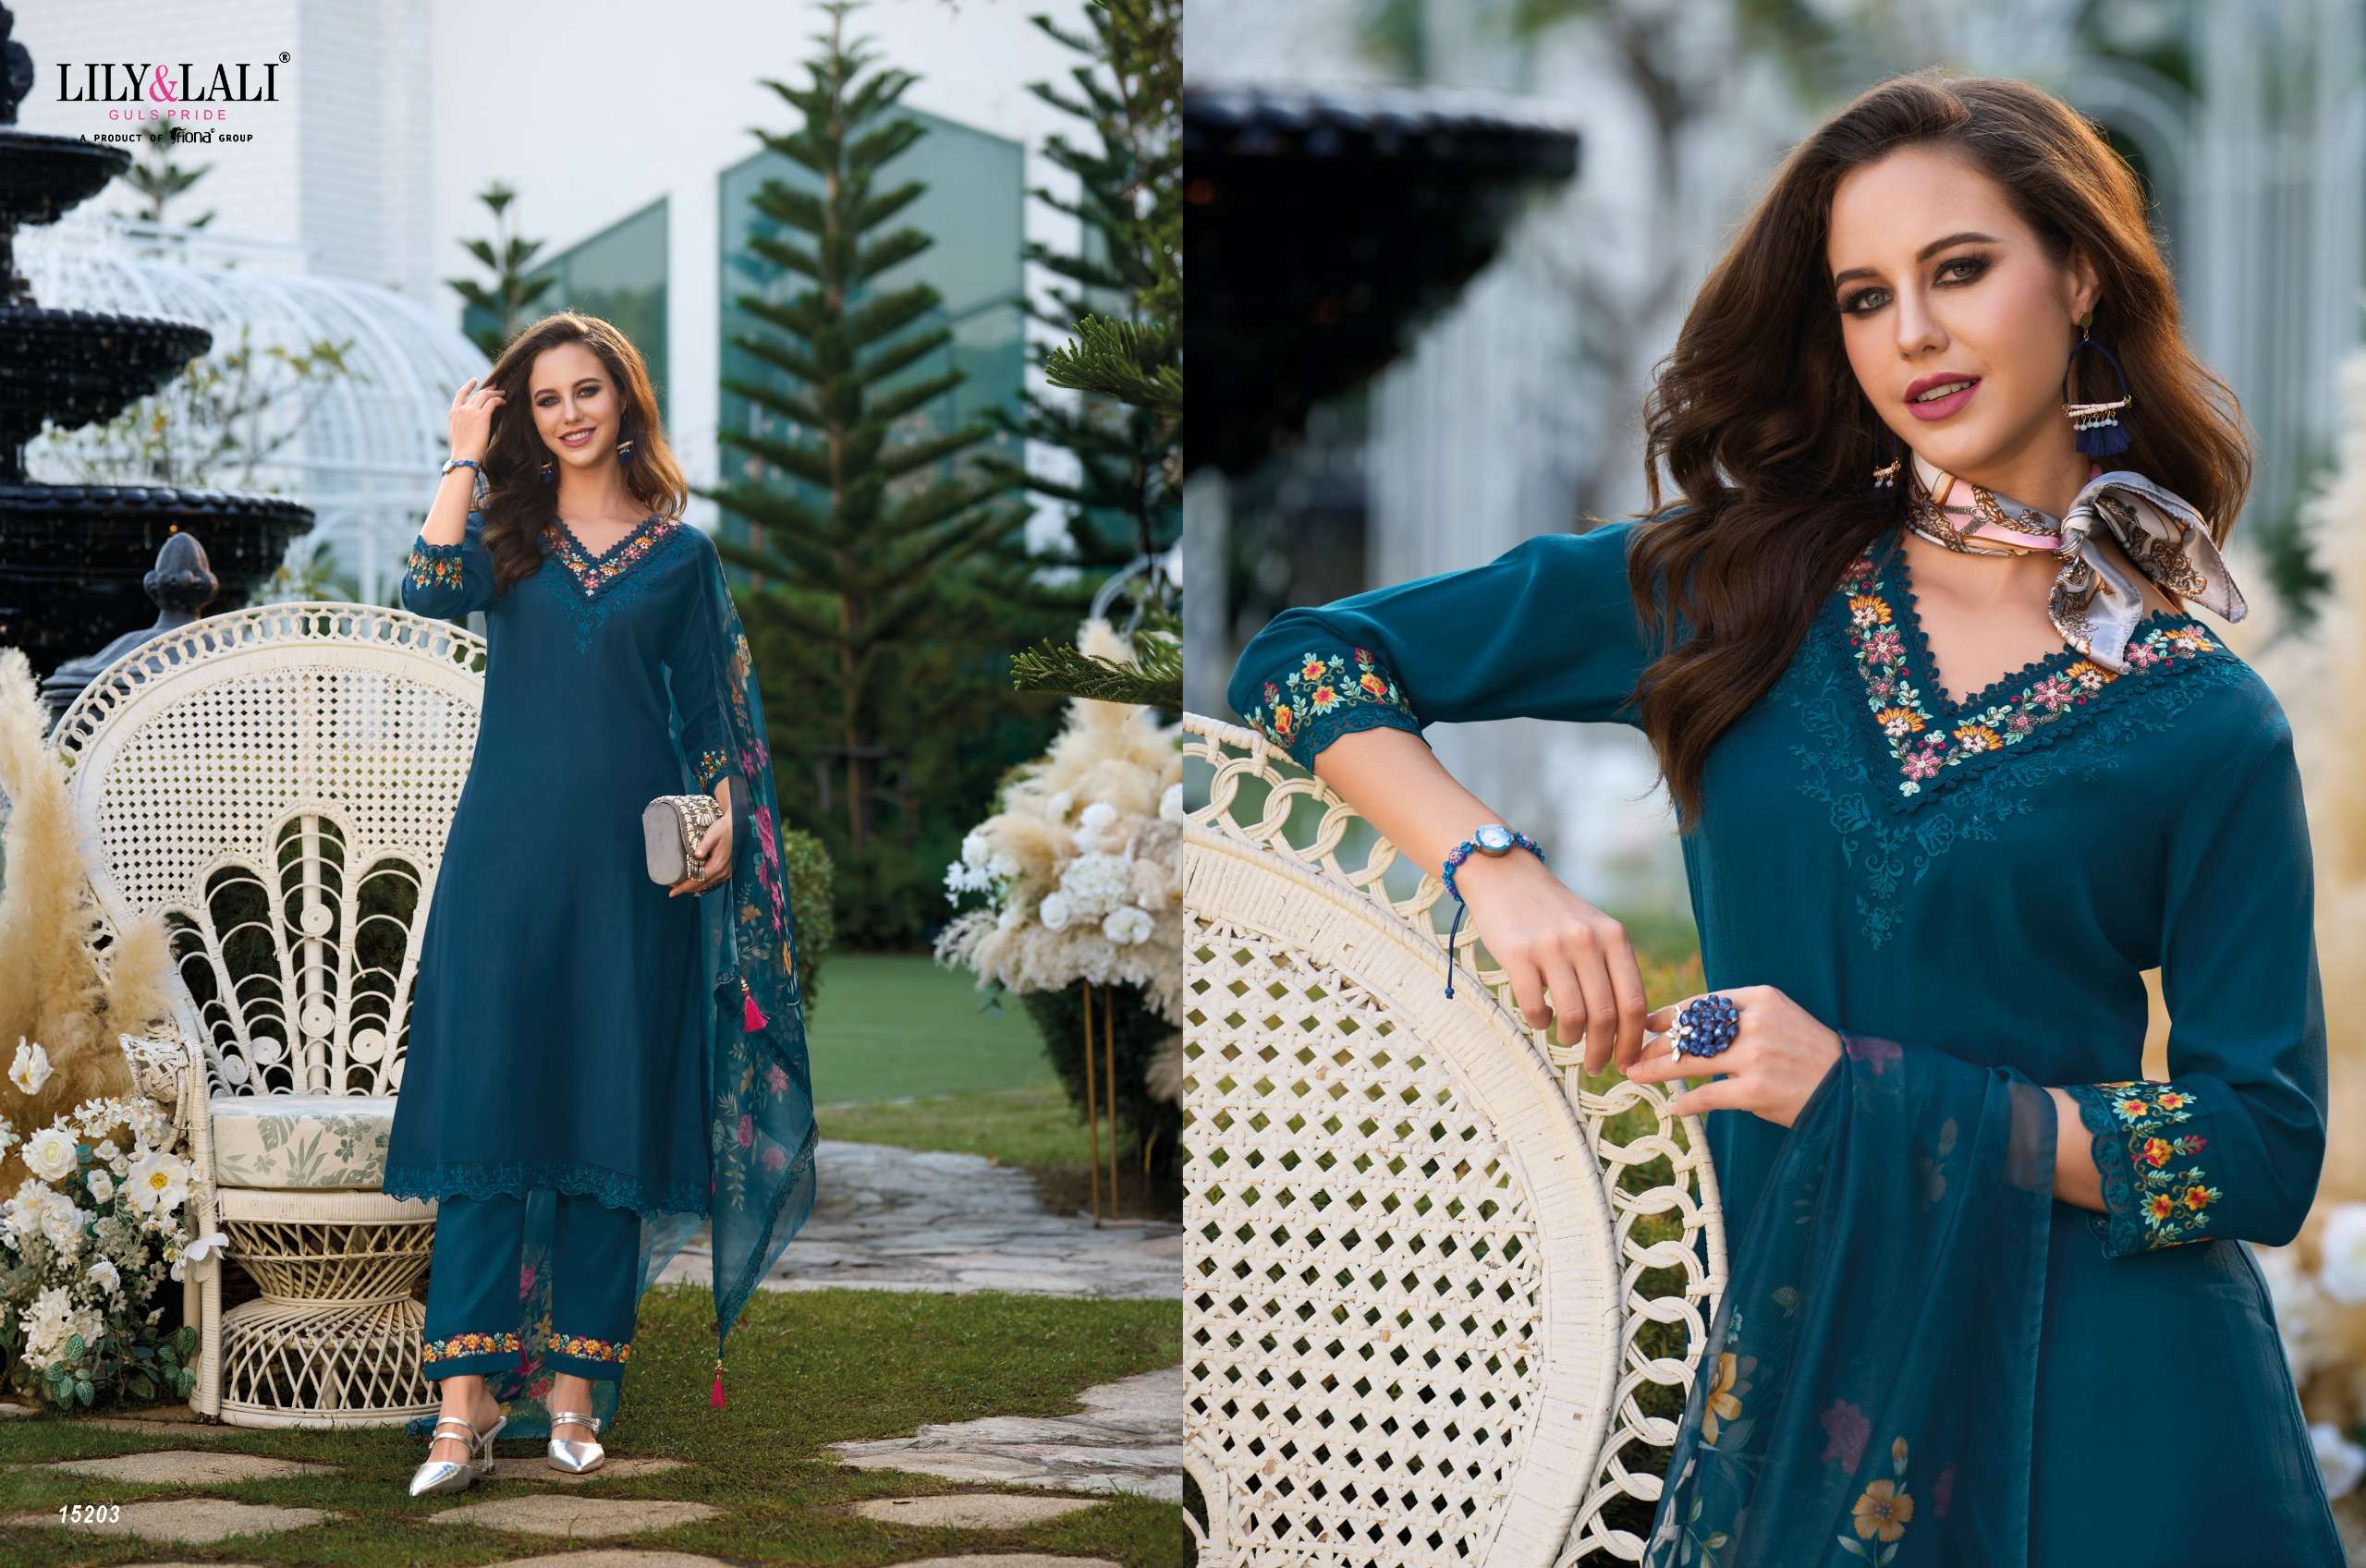 Malvika Buy Lily Lali Wholesale Online Lowest Price In India Designer Kurta Suit Sets